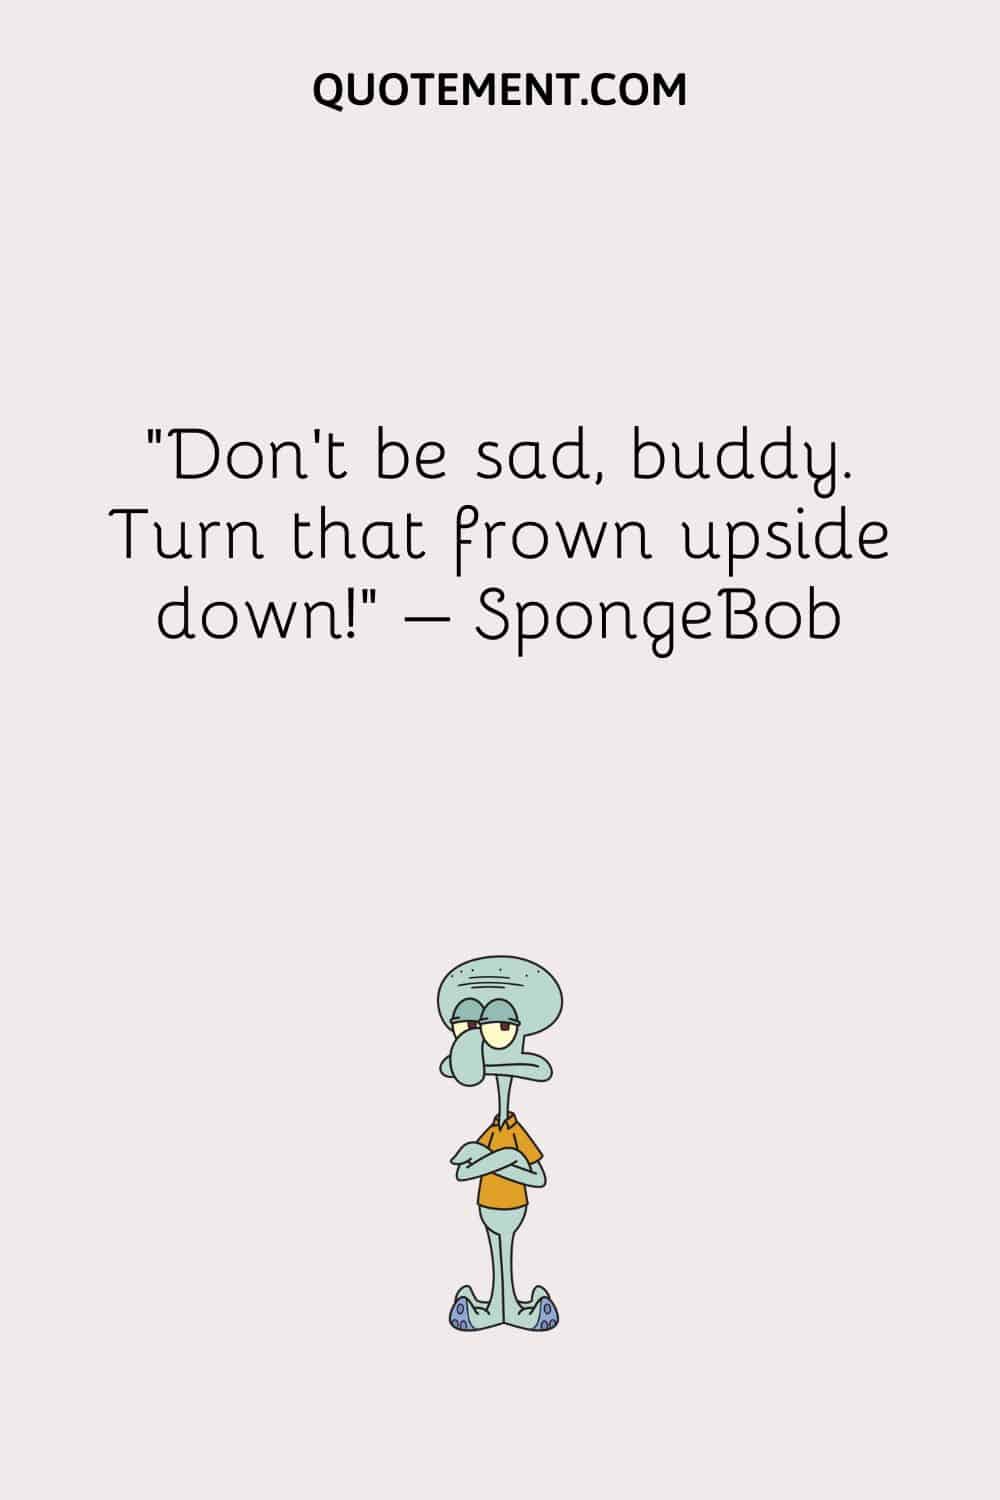 “Don't be sad, buddy. Turn that frown upside down!” – SpongeBob